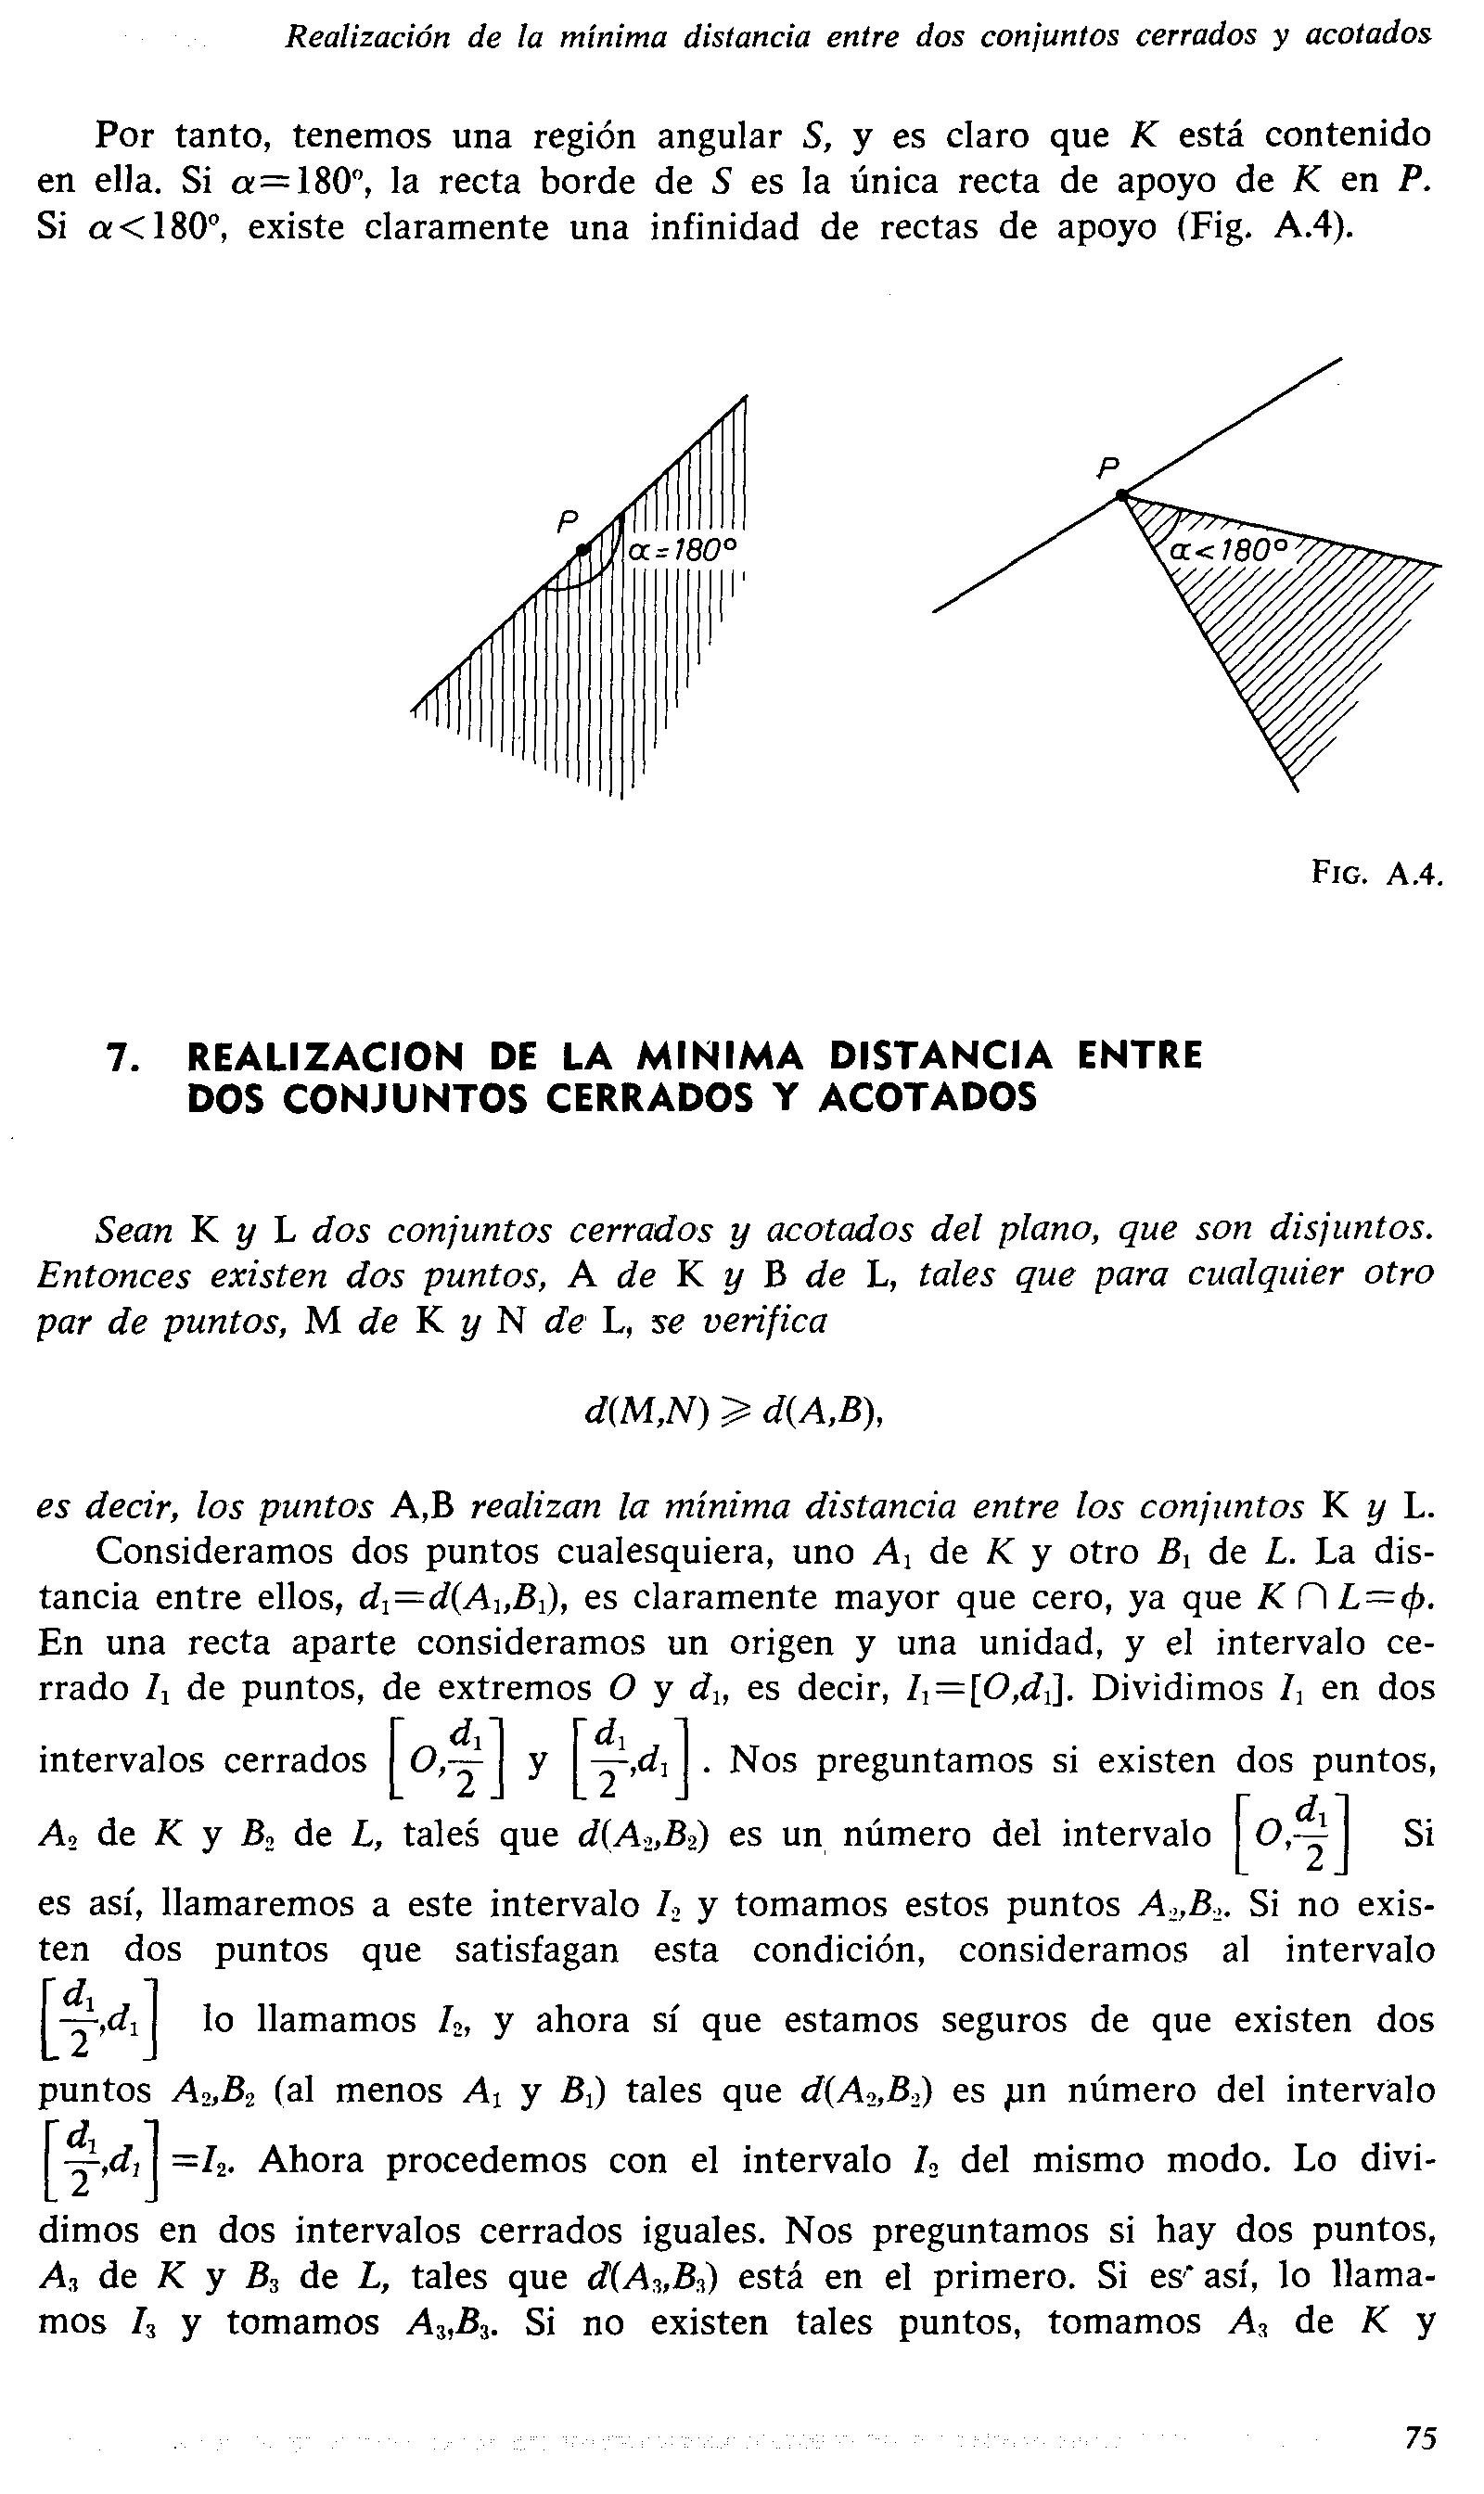 Graphics (p.1-1)